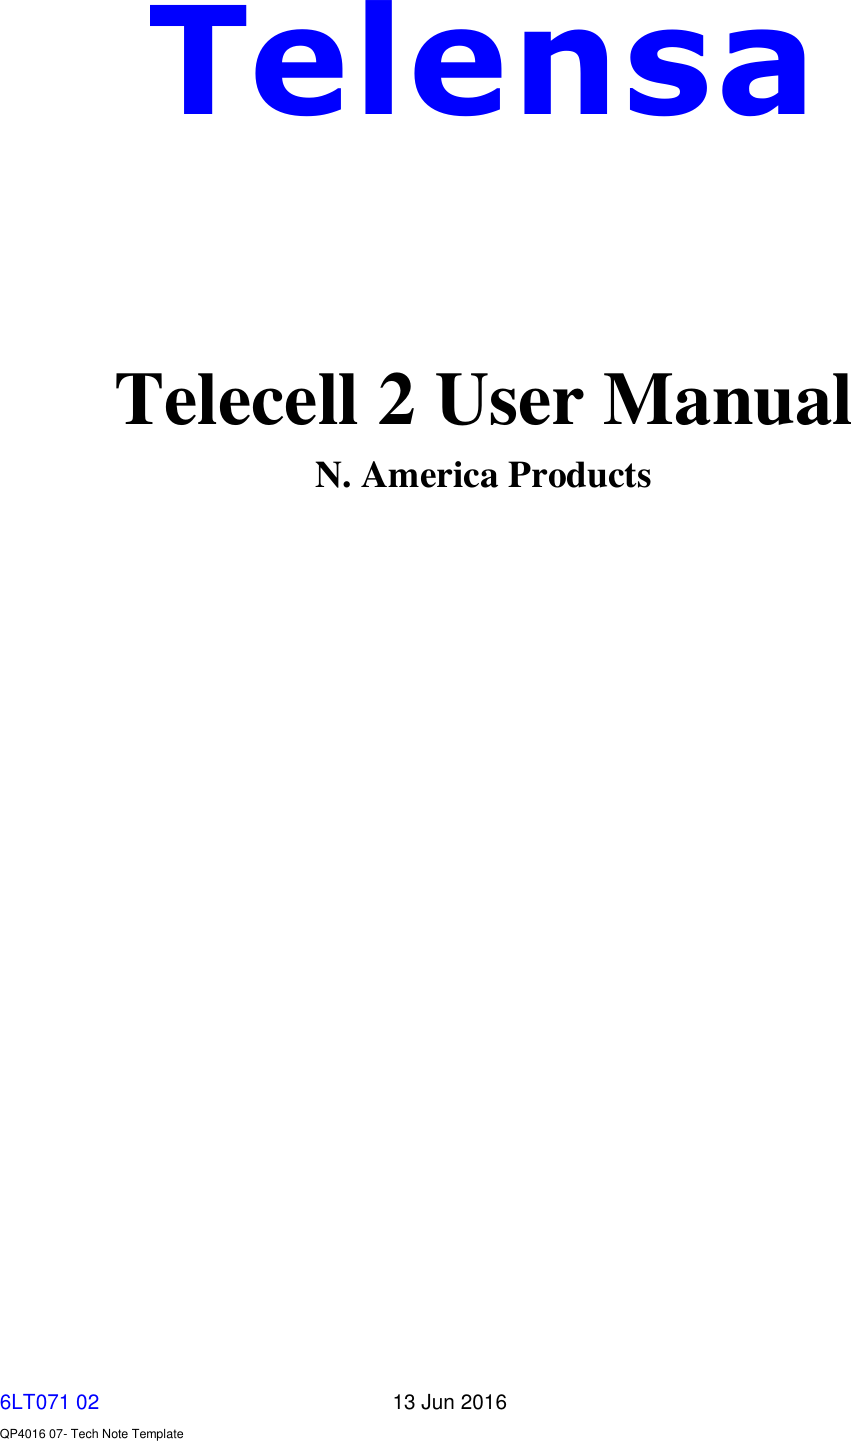   6LT071 02       13 Jun 2016    QP4016 07- Tech Note Template Telensa    Telecell 2 User Manual N. America Products                 